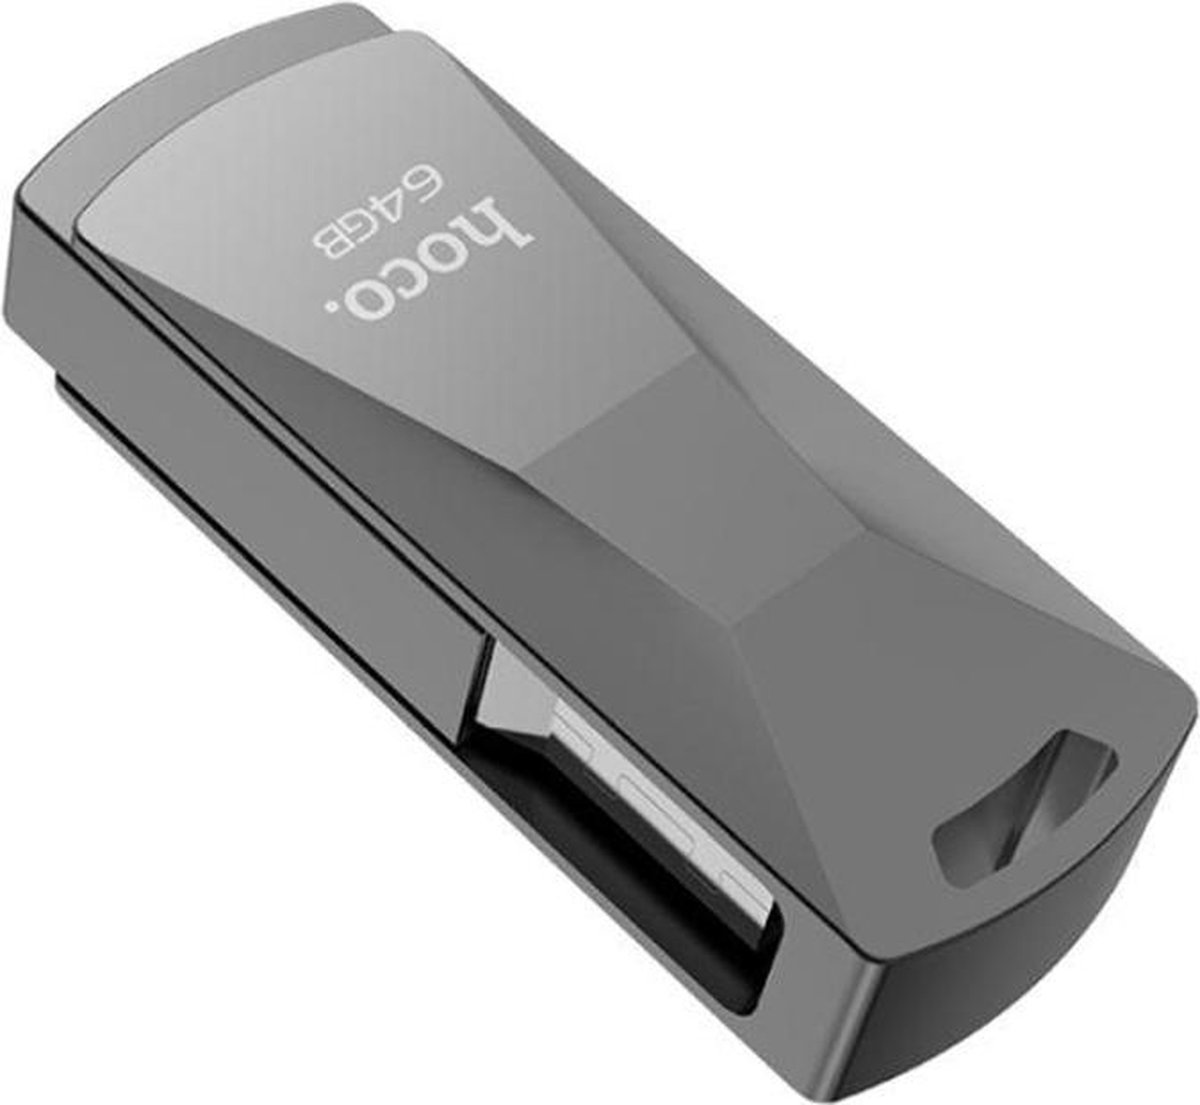 Hoco Wisdom UD5 USB 3.0 Metal Memory Flash Disk Drive - Hoco